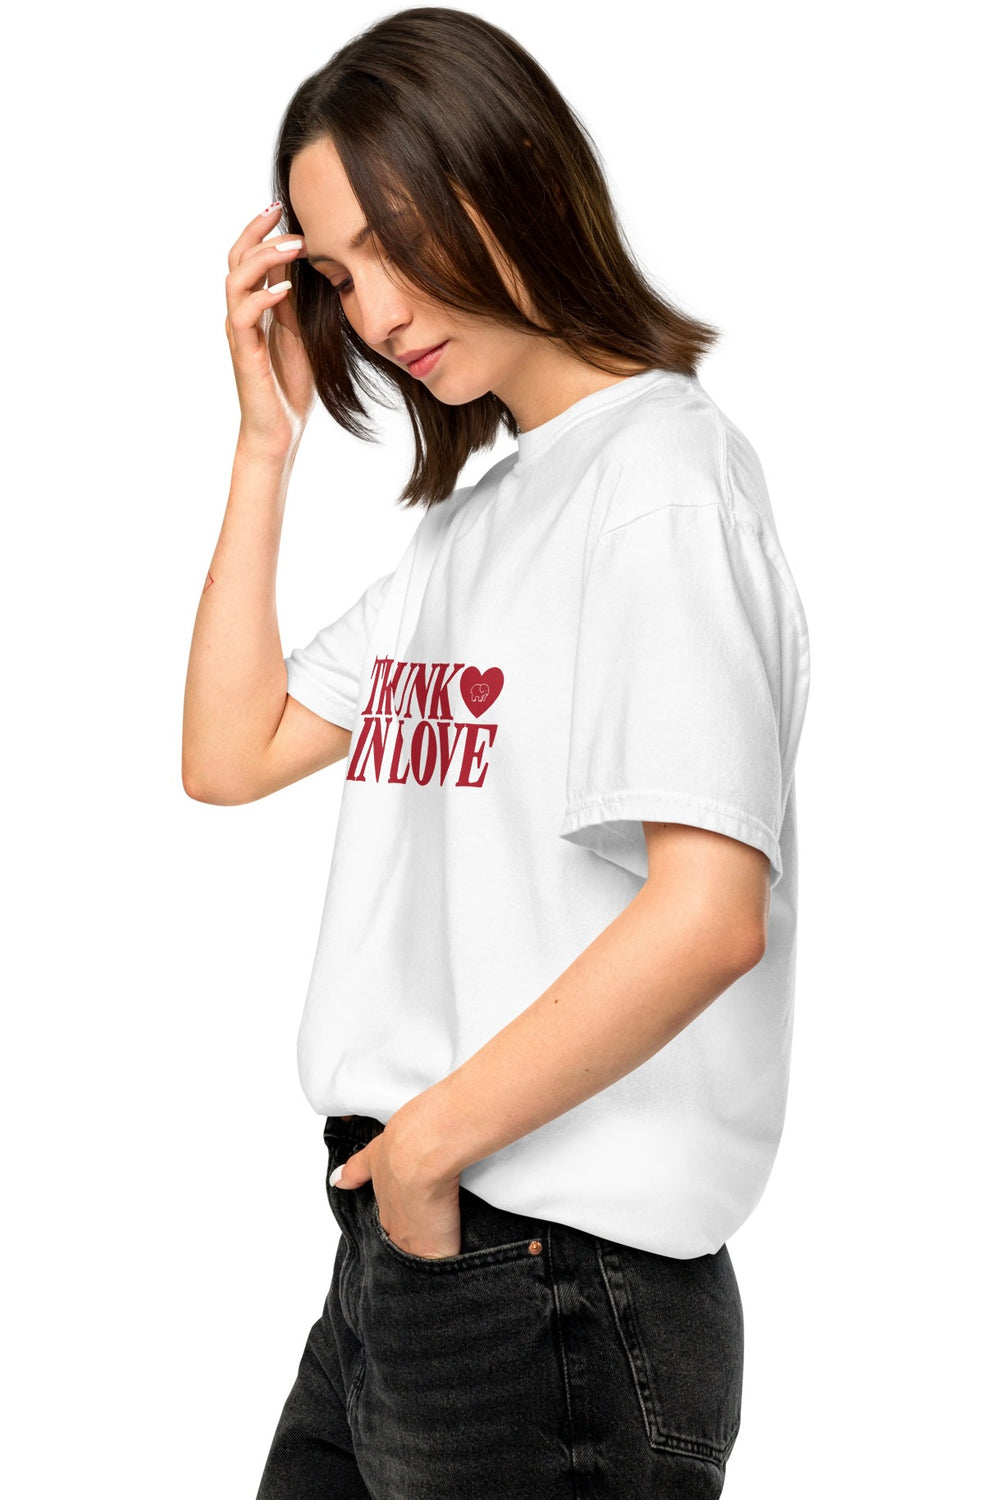 Trunk in Love Short Sleeve Unisex T-Shirt